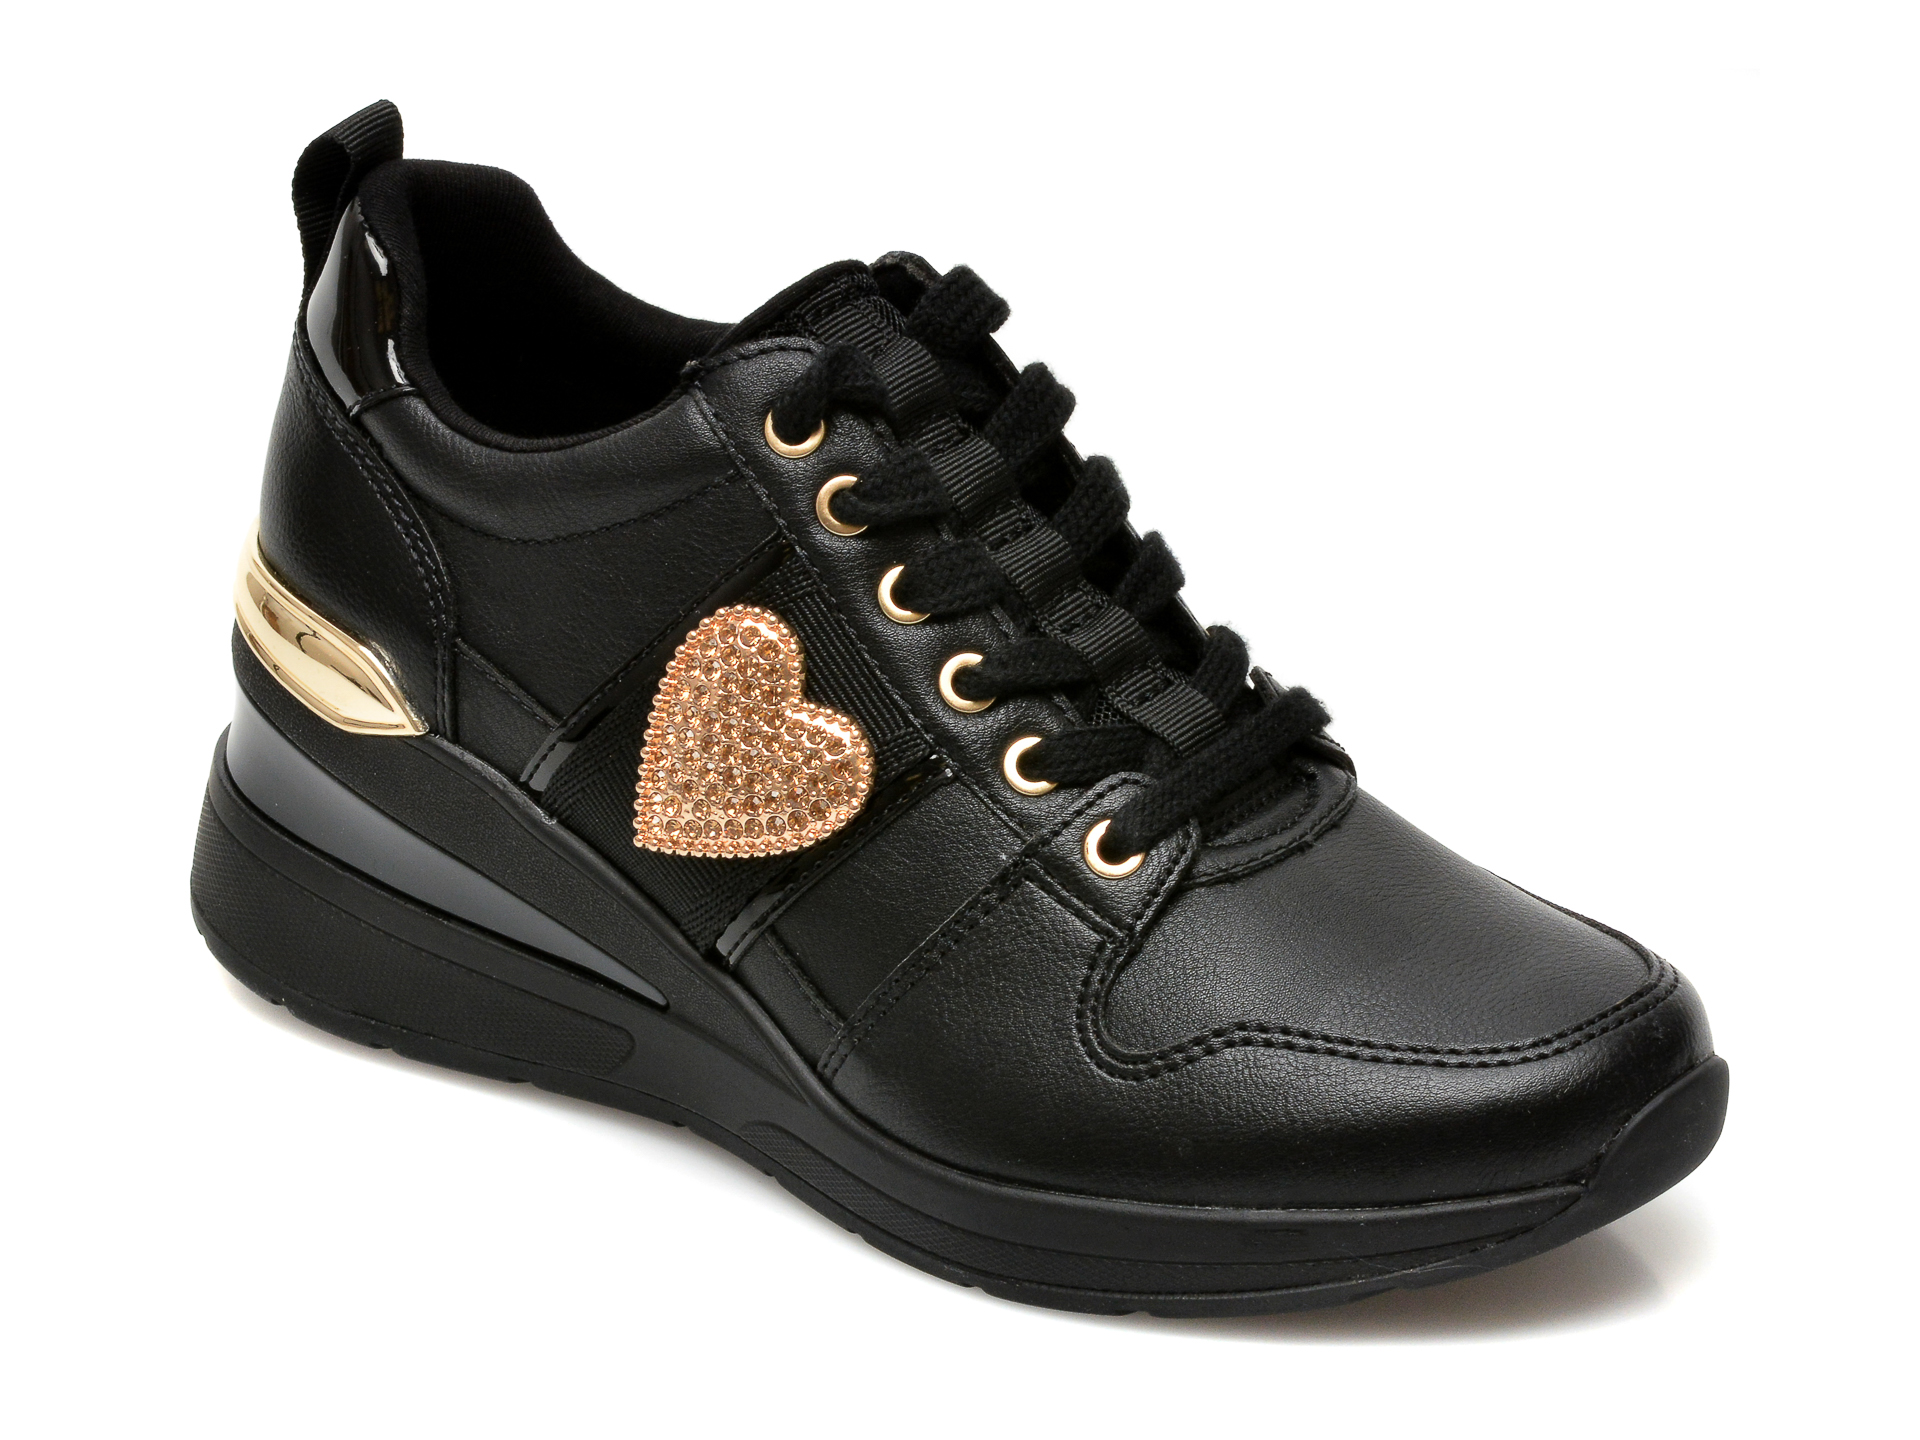 Pantofi ALDO negri, Zalle001, din piele ecologica